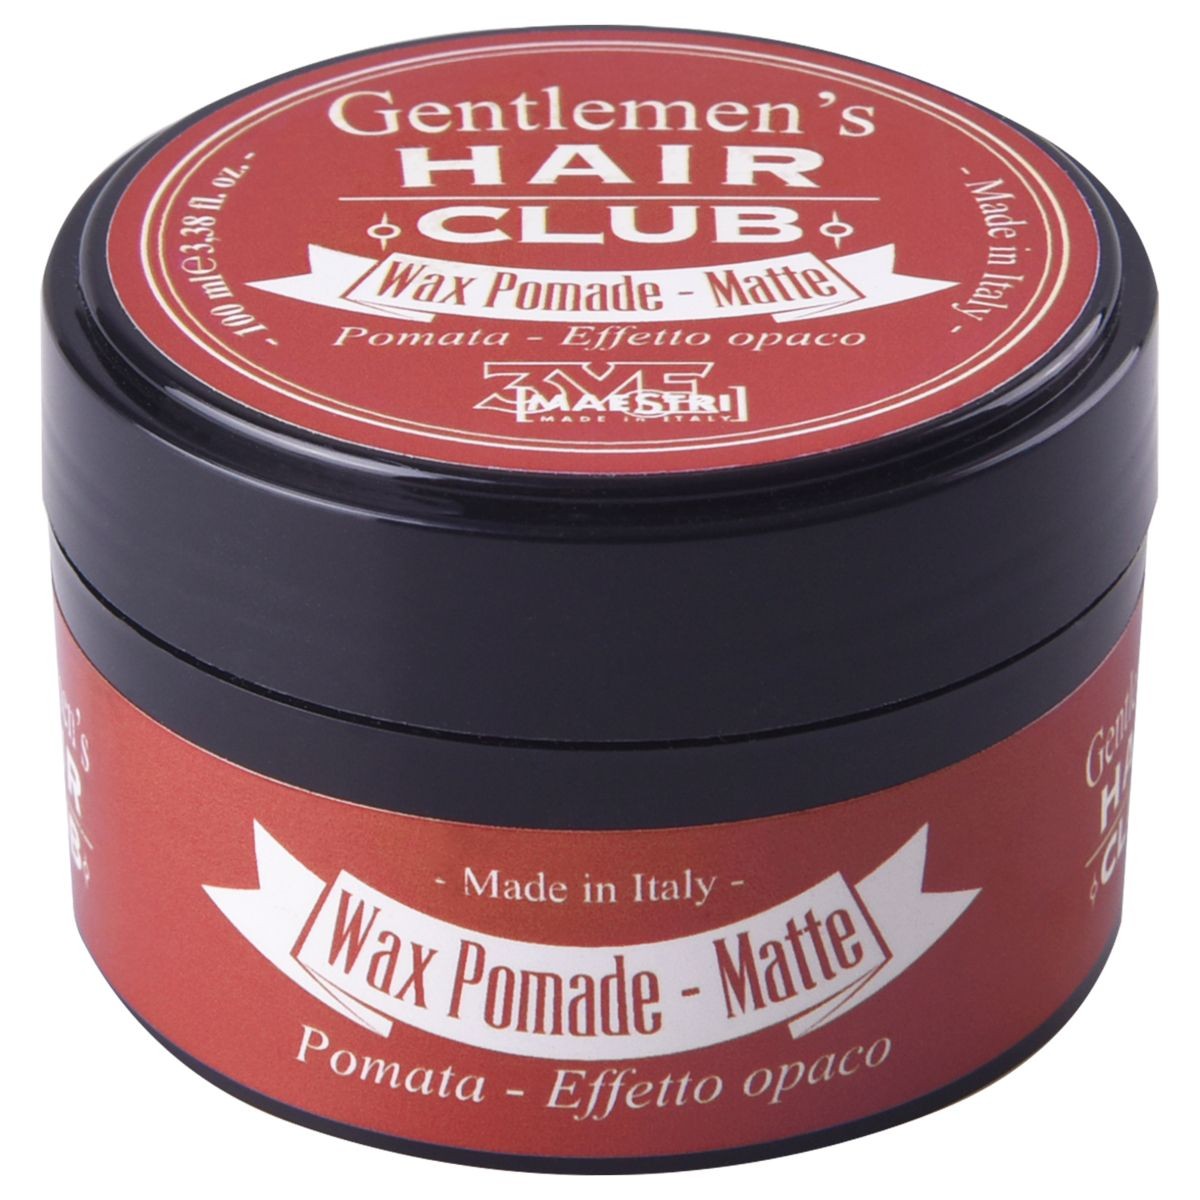 3ME Gentlemen's Harr Club Wax Pomade Matte effetto opaco 100 ml